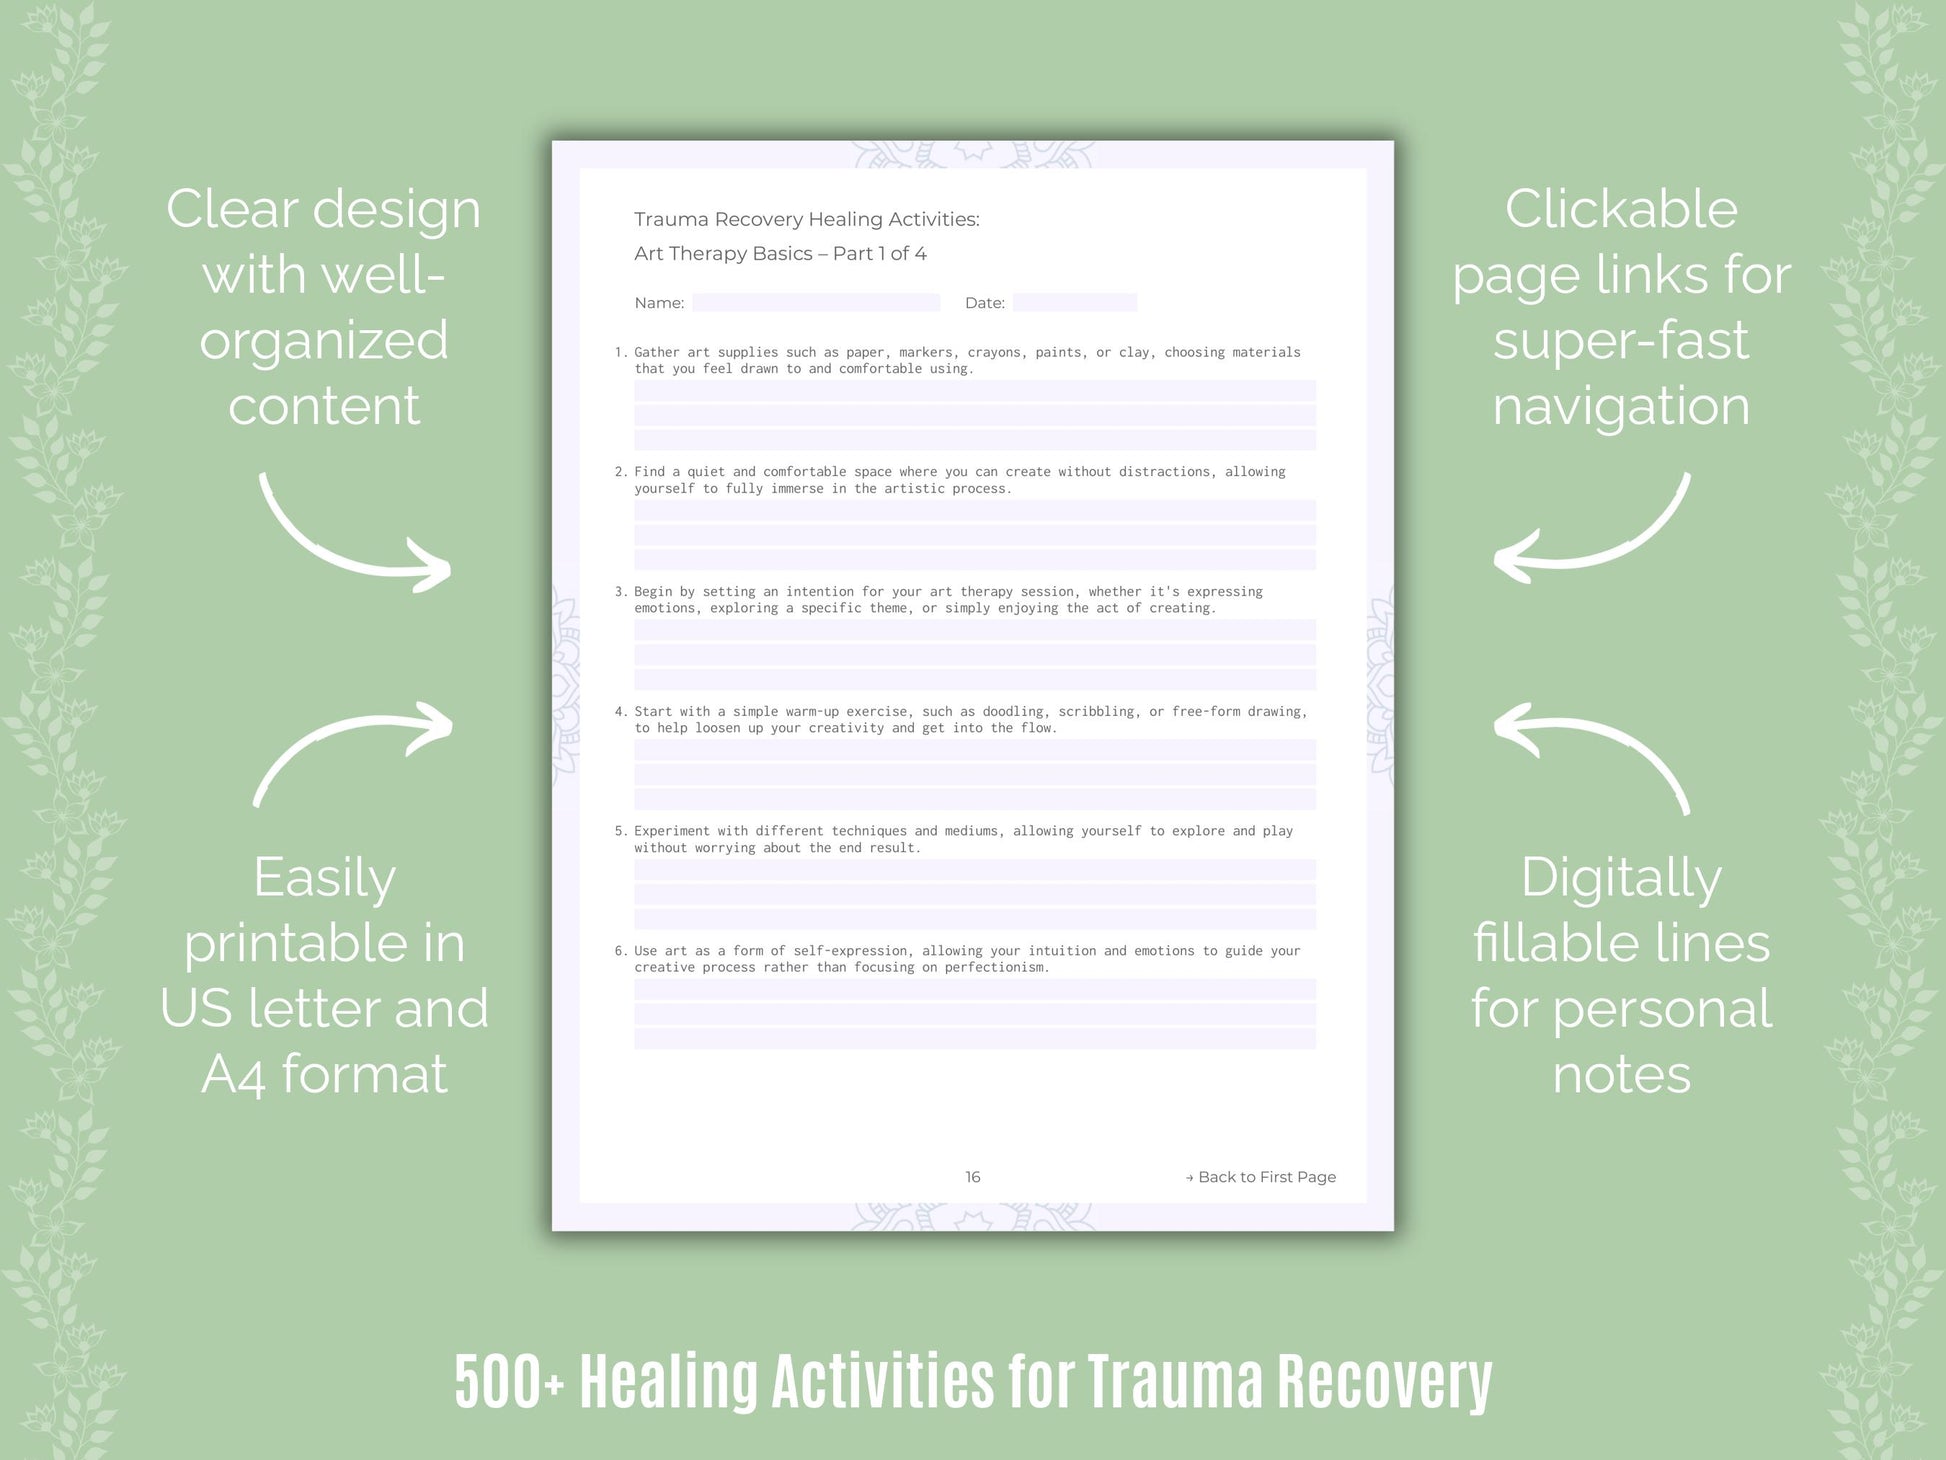 Trauma Recovery Healing Activities Resource